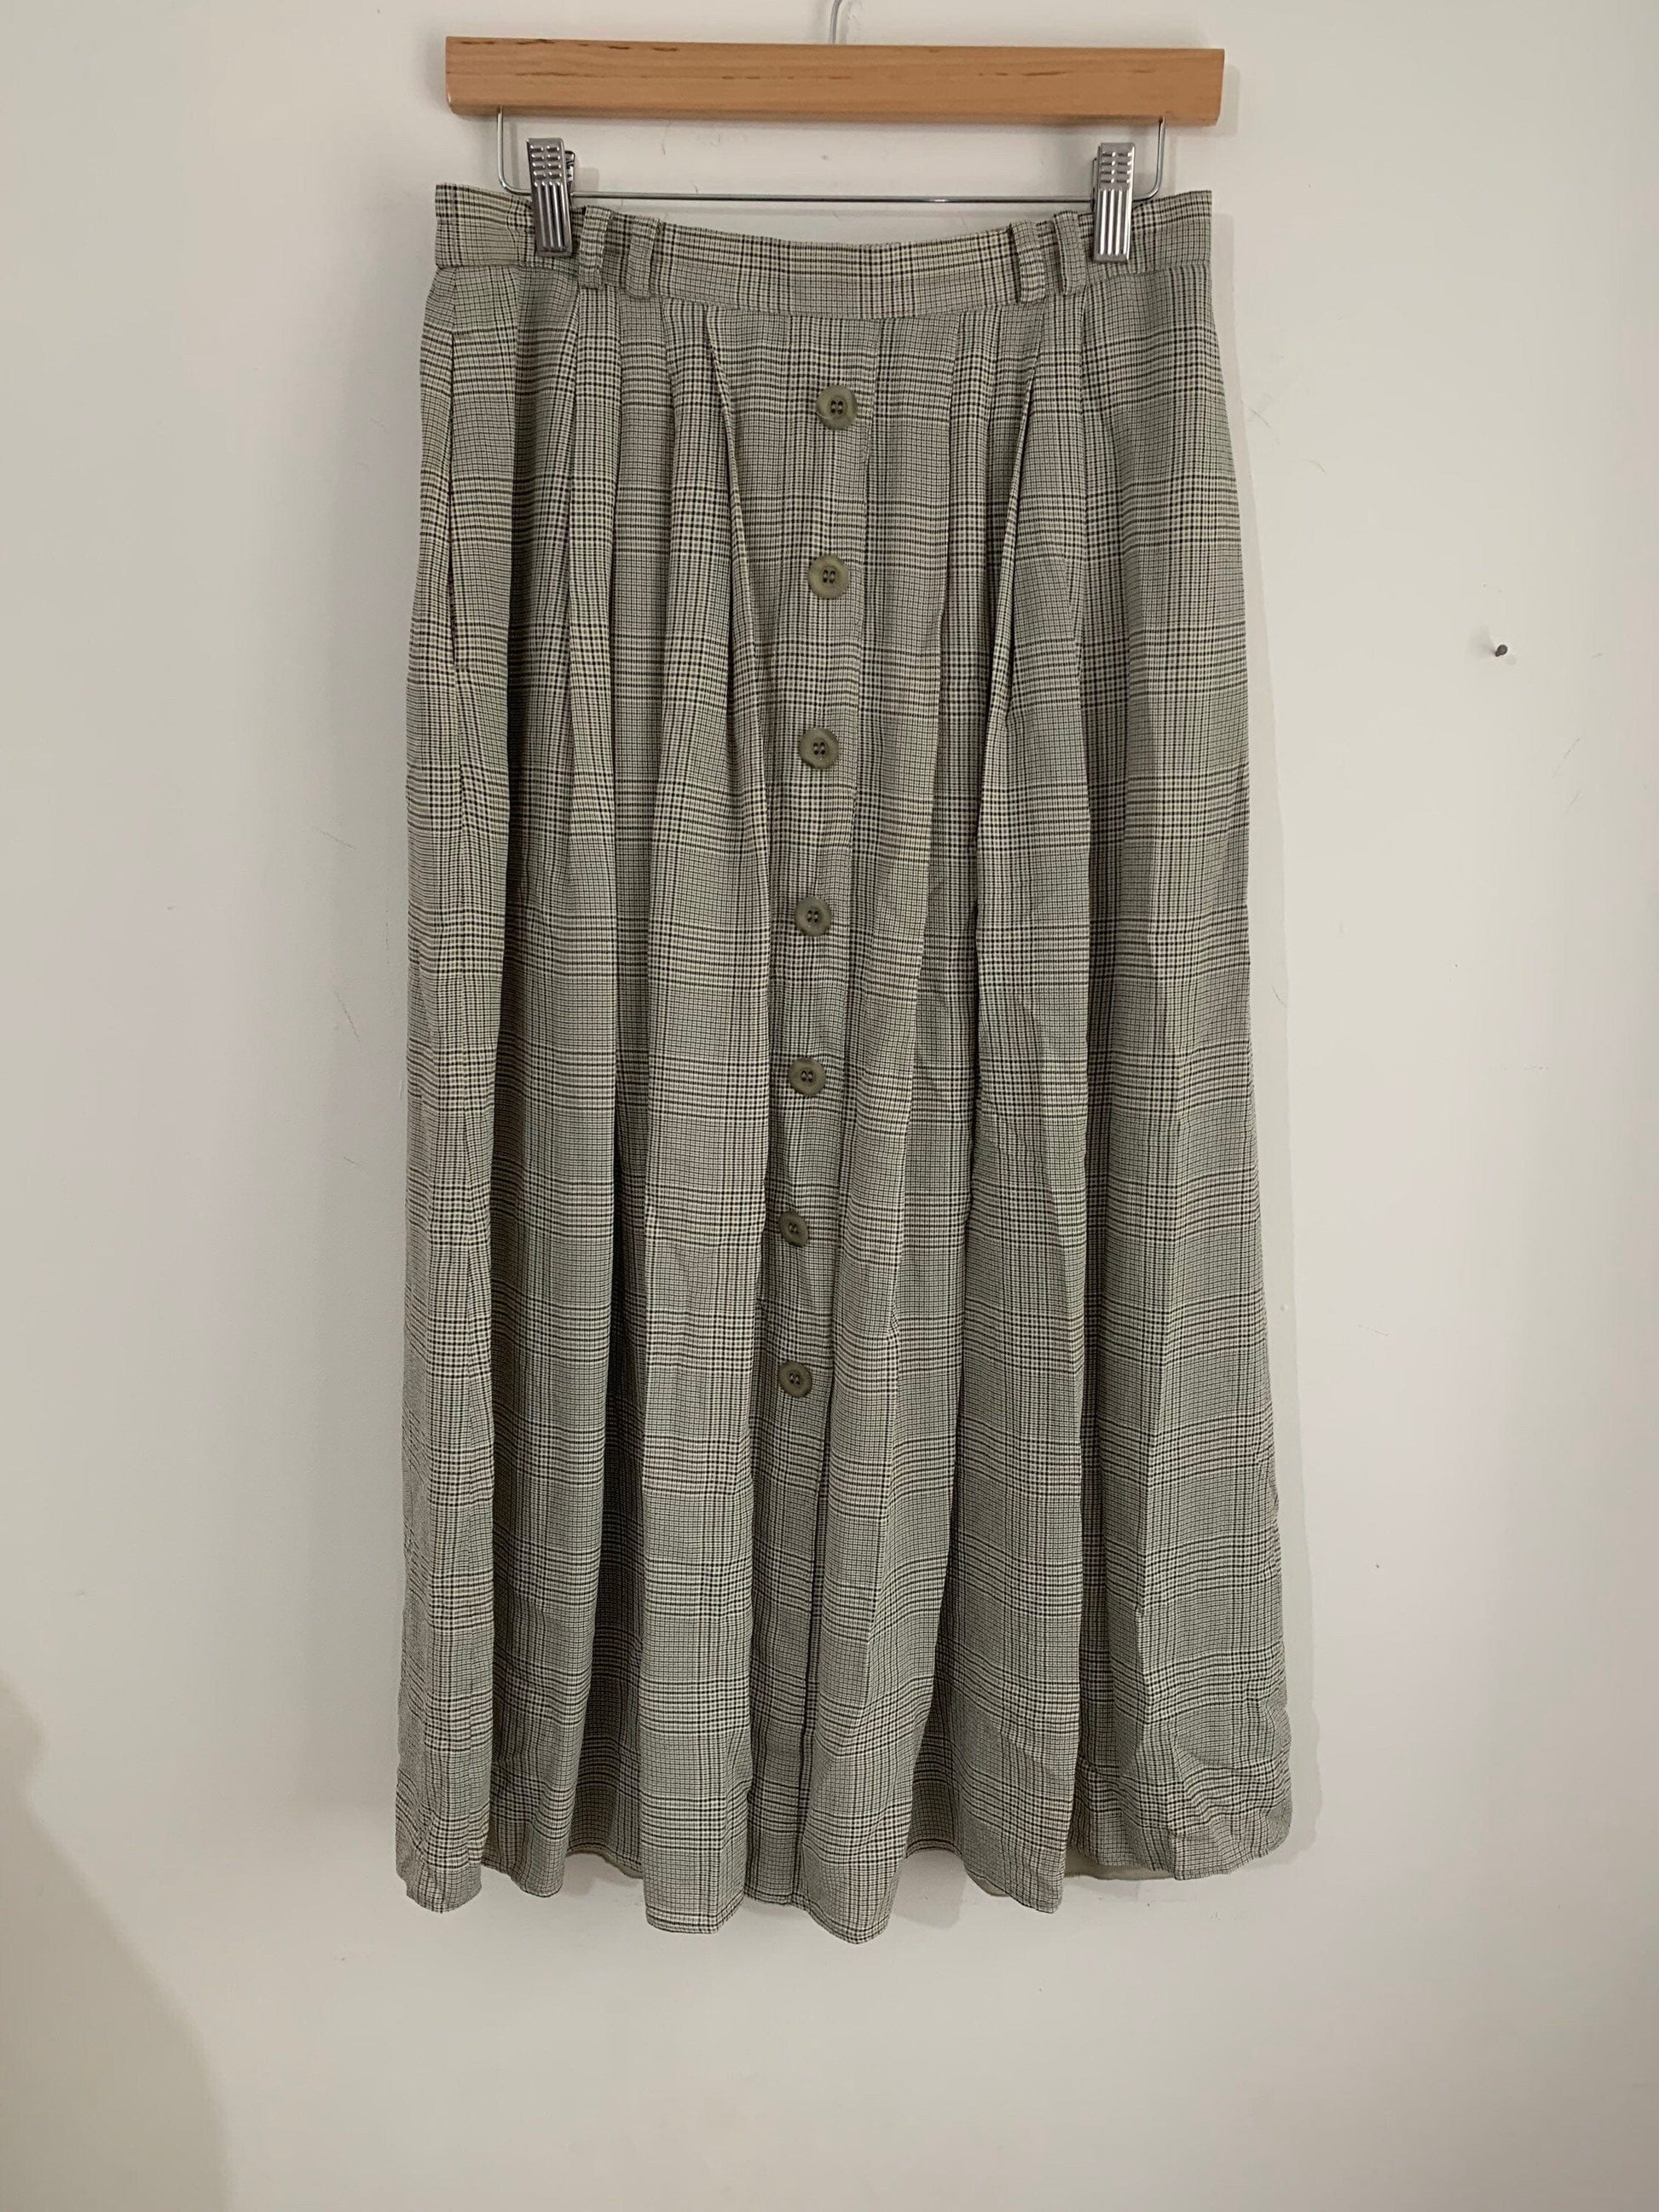 Vintage Gardeur Skirt Midi Length Grey Green Checked  UK 12/14 With pockets